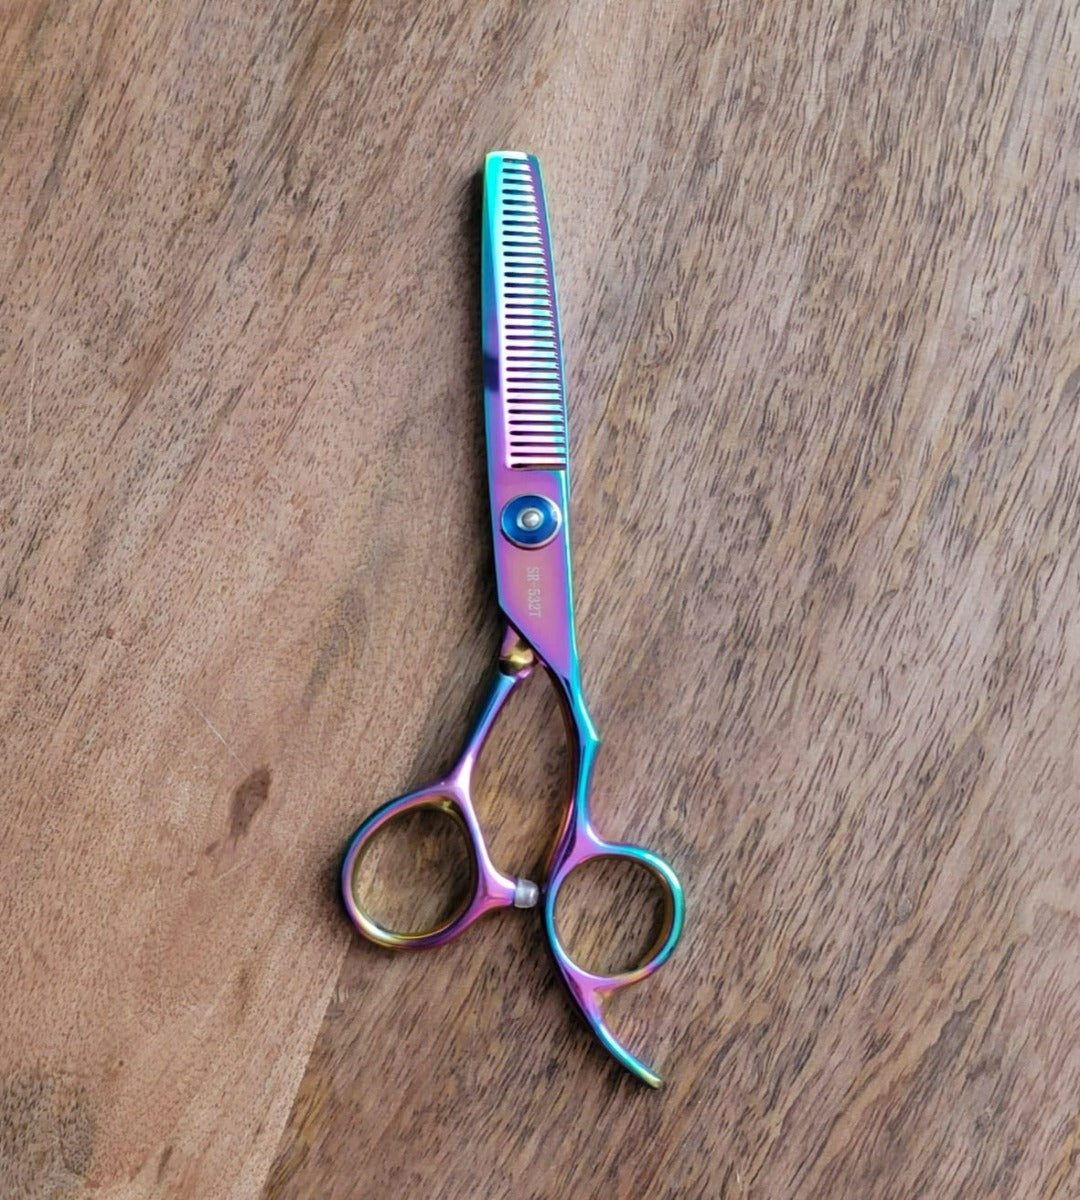 Kashi Professional Thinning Hair Shears SR-532T Rainbow Color 